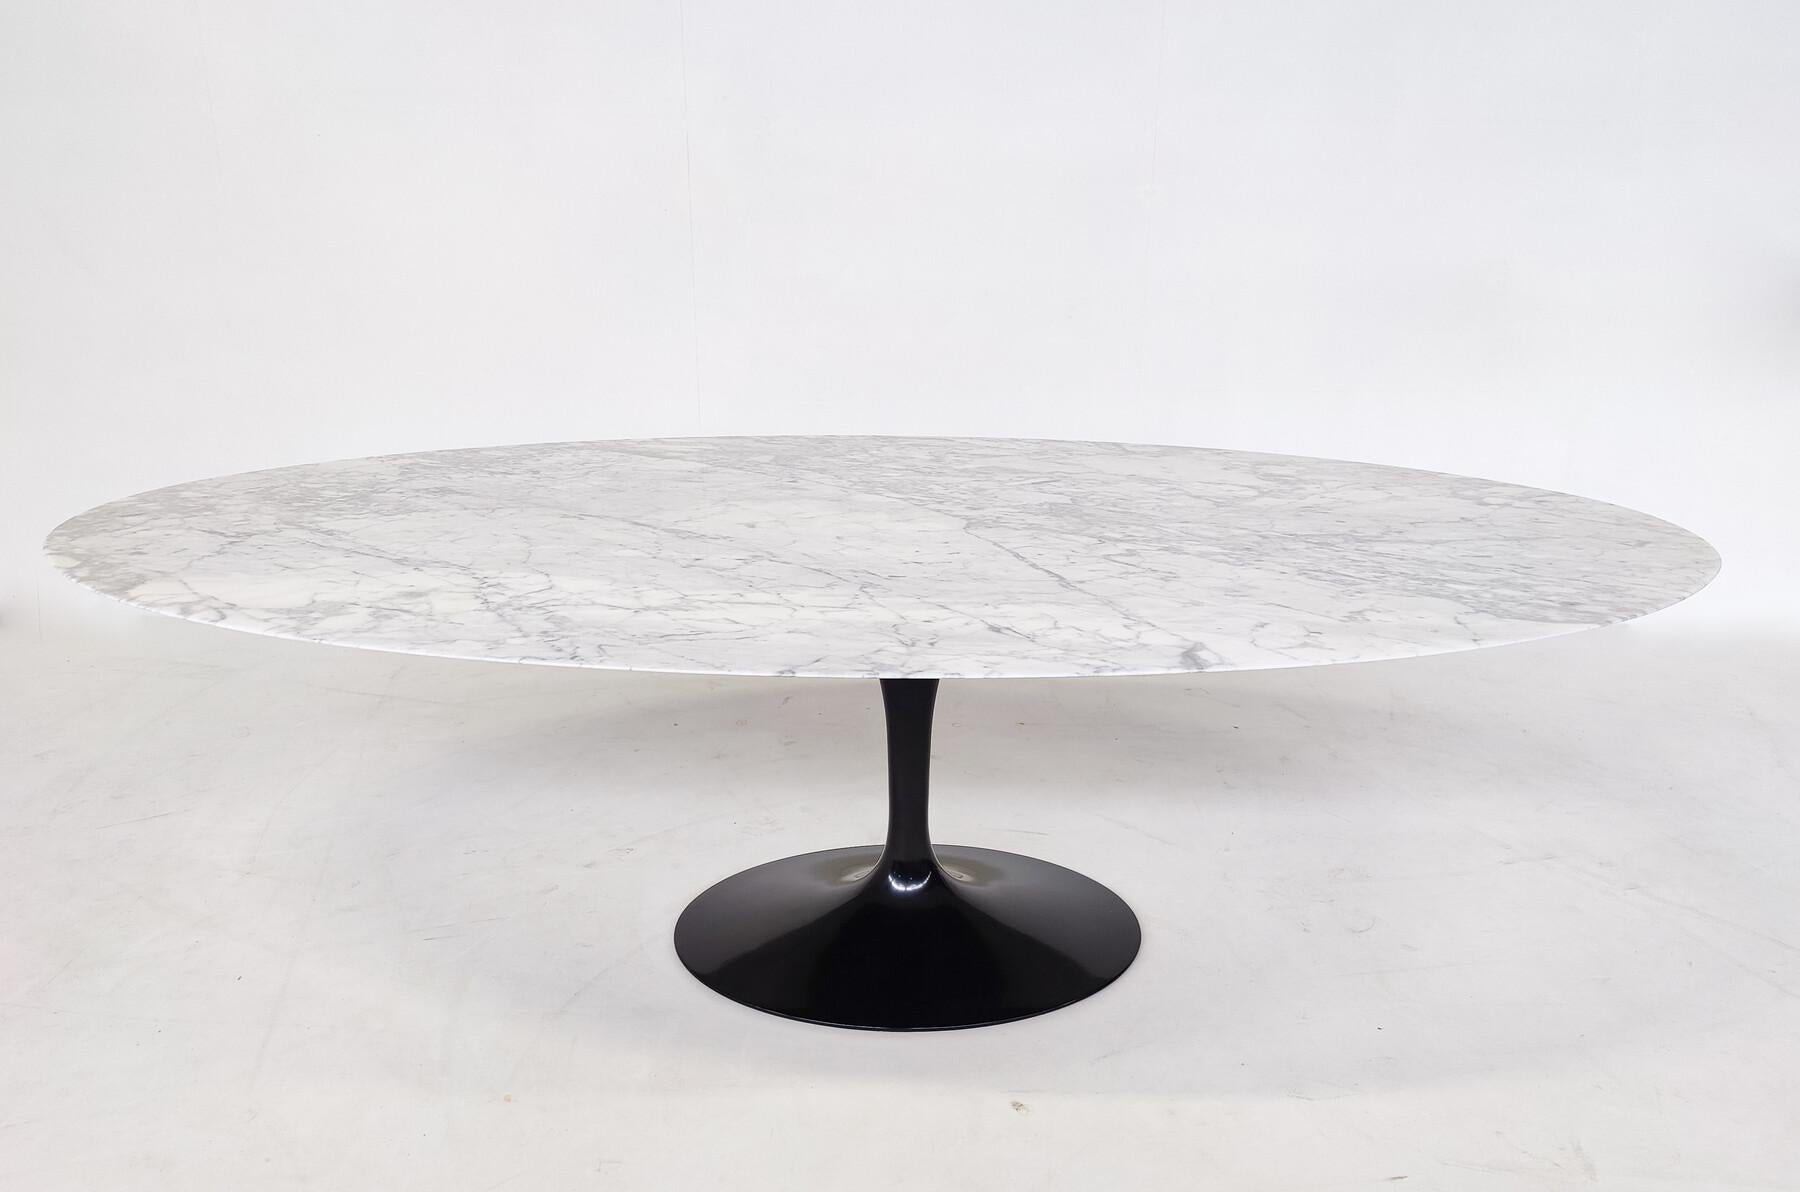 Mid-Century Modern dining table by Eero Saarinen for Knoll International, 1960s.